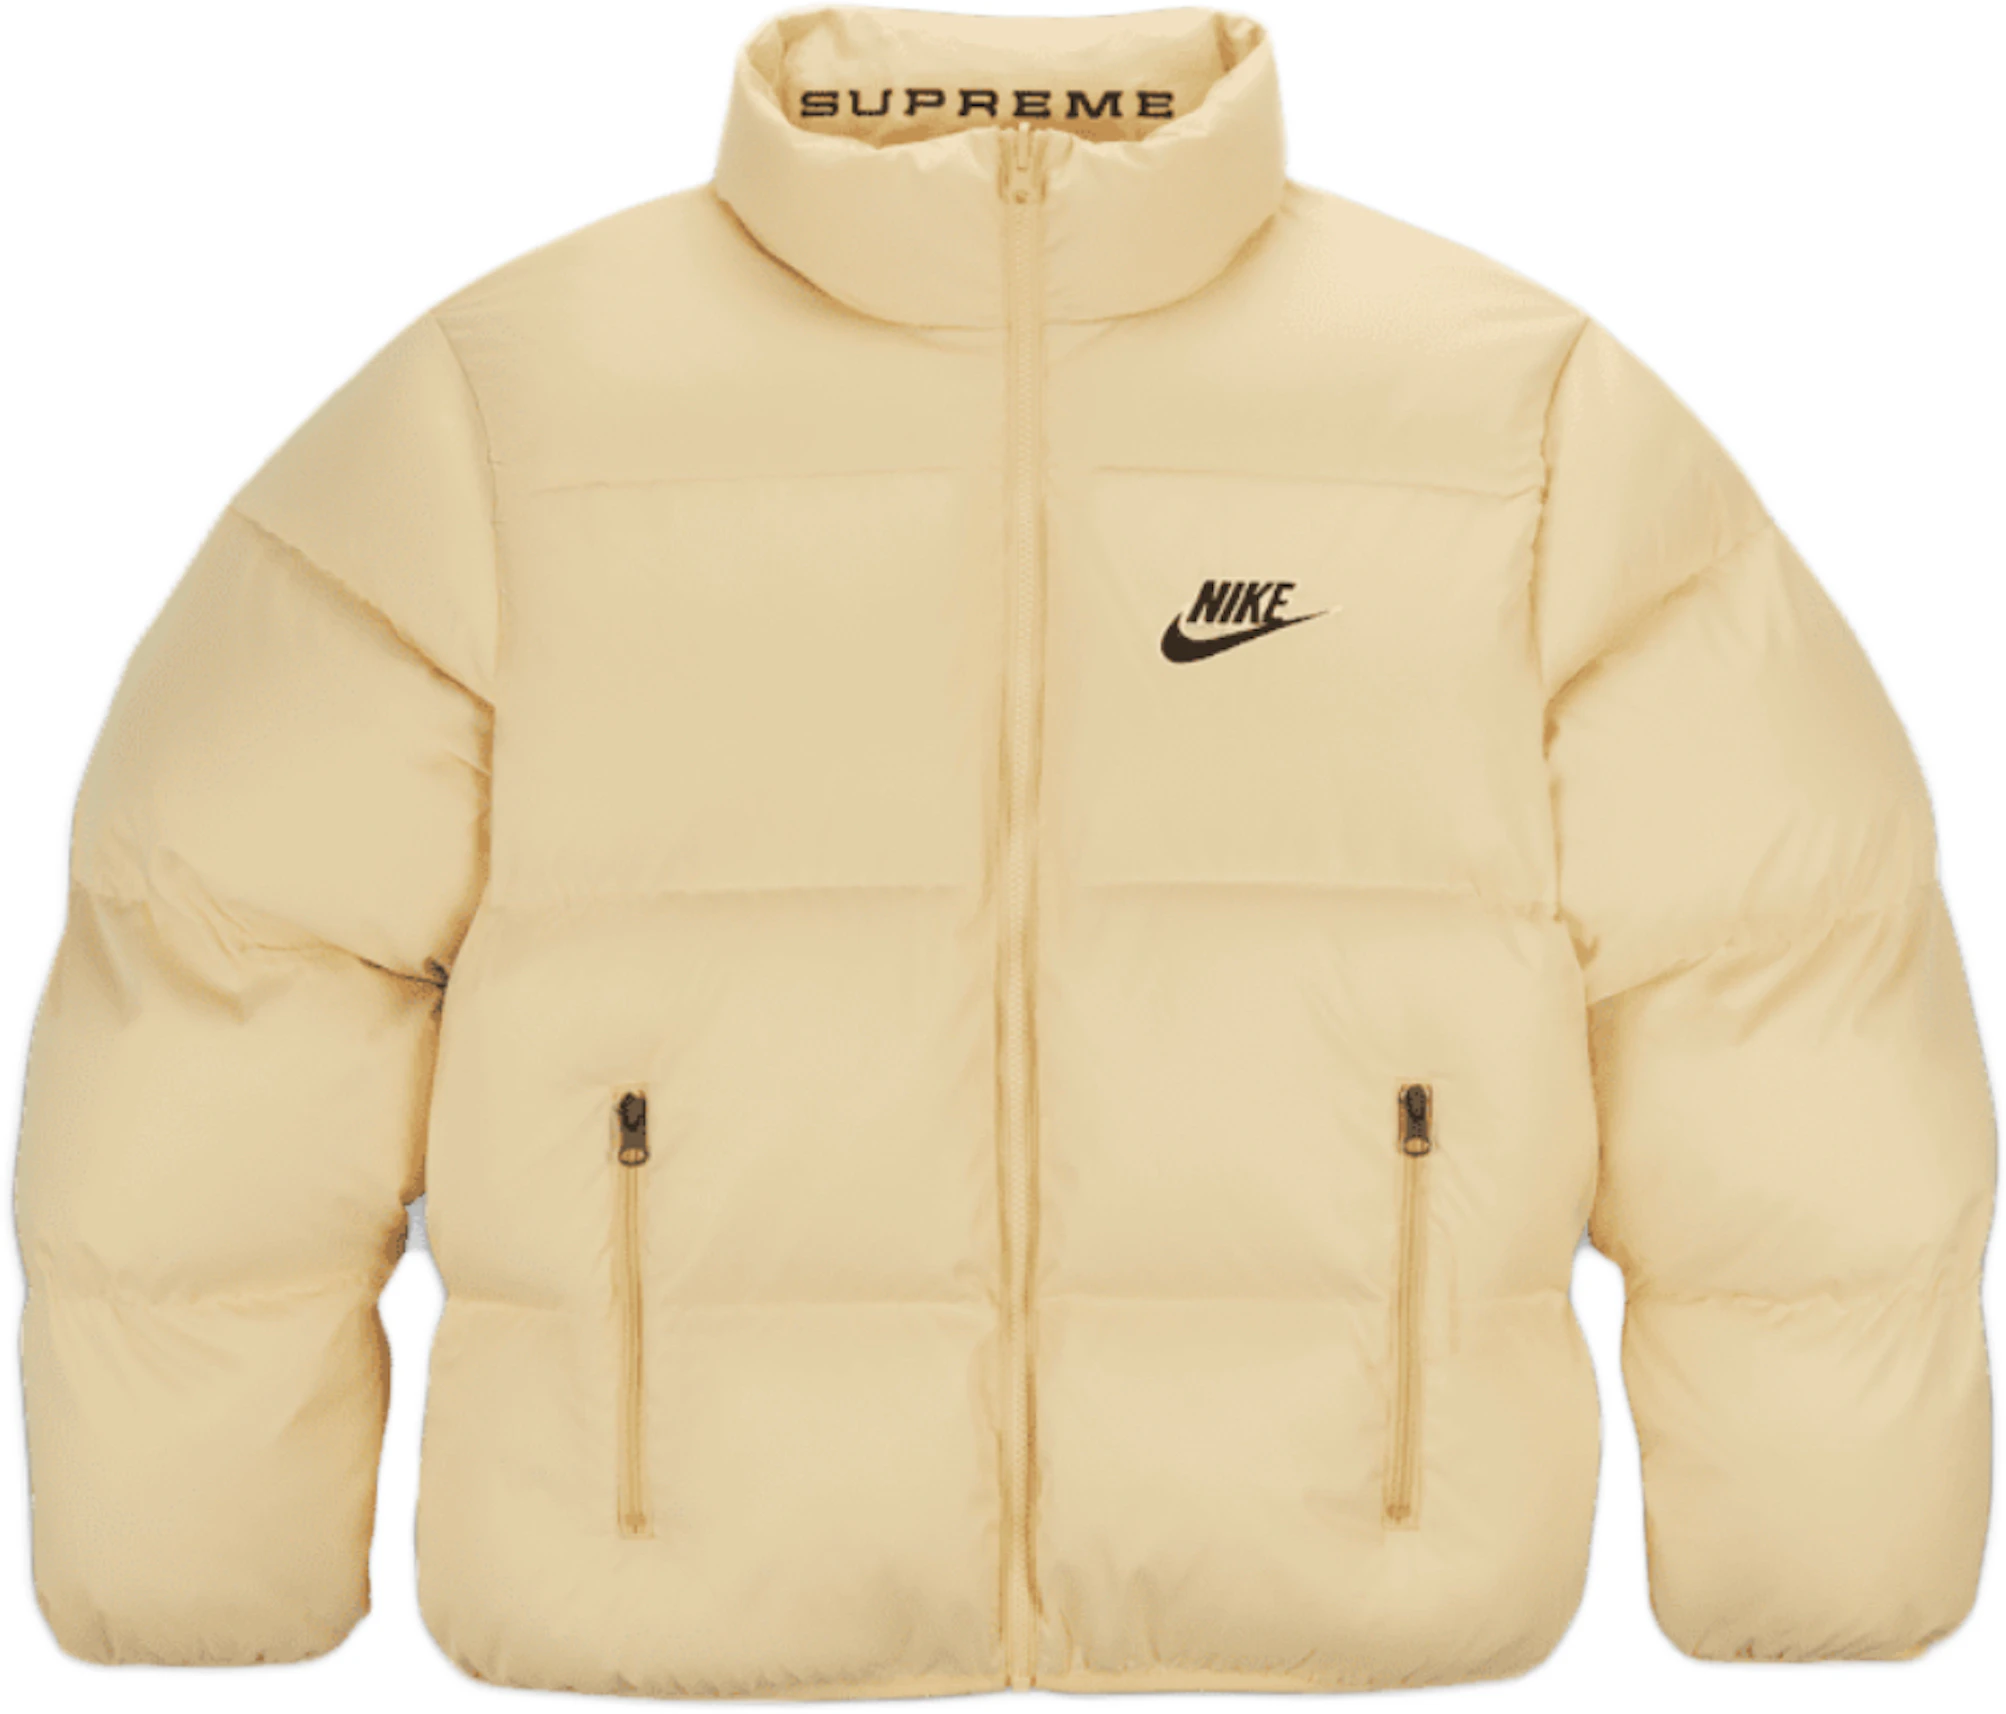 Supreme/NikeReversible Puffy Jacket